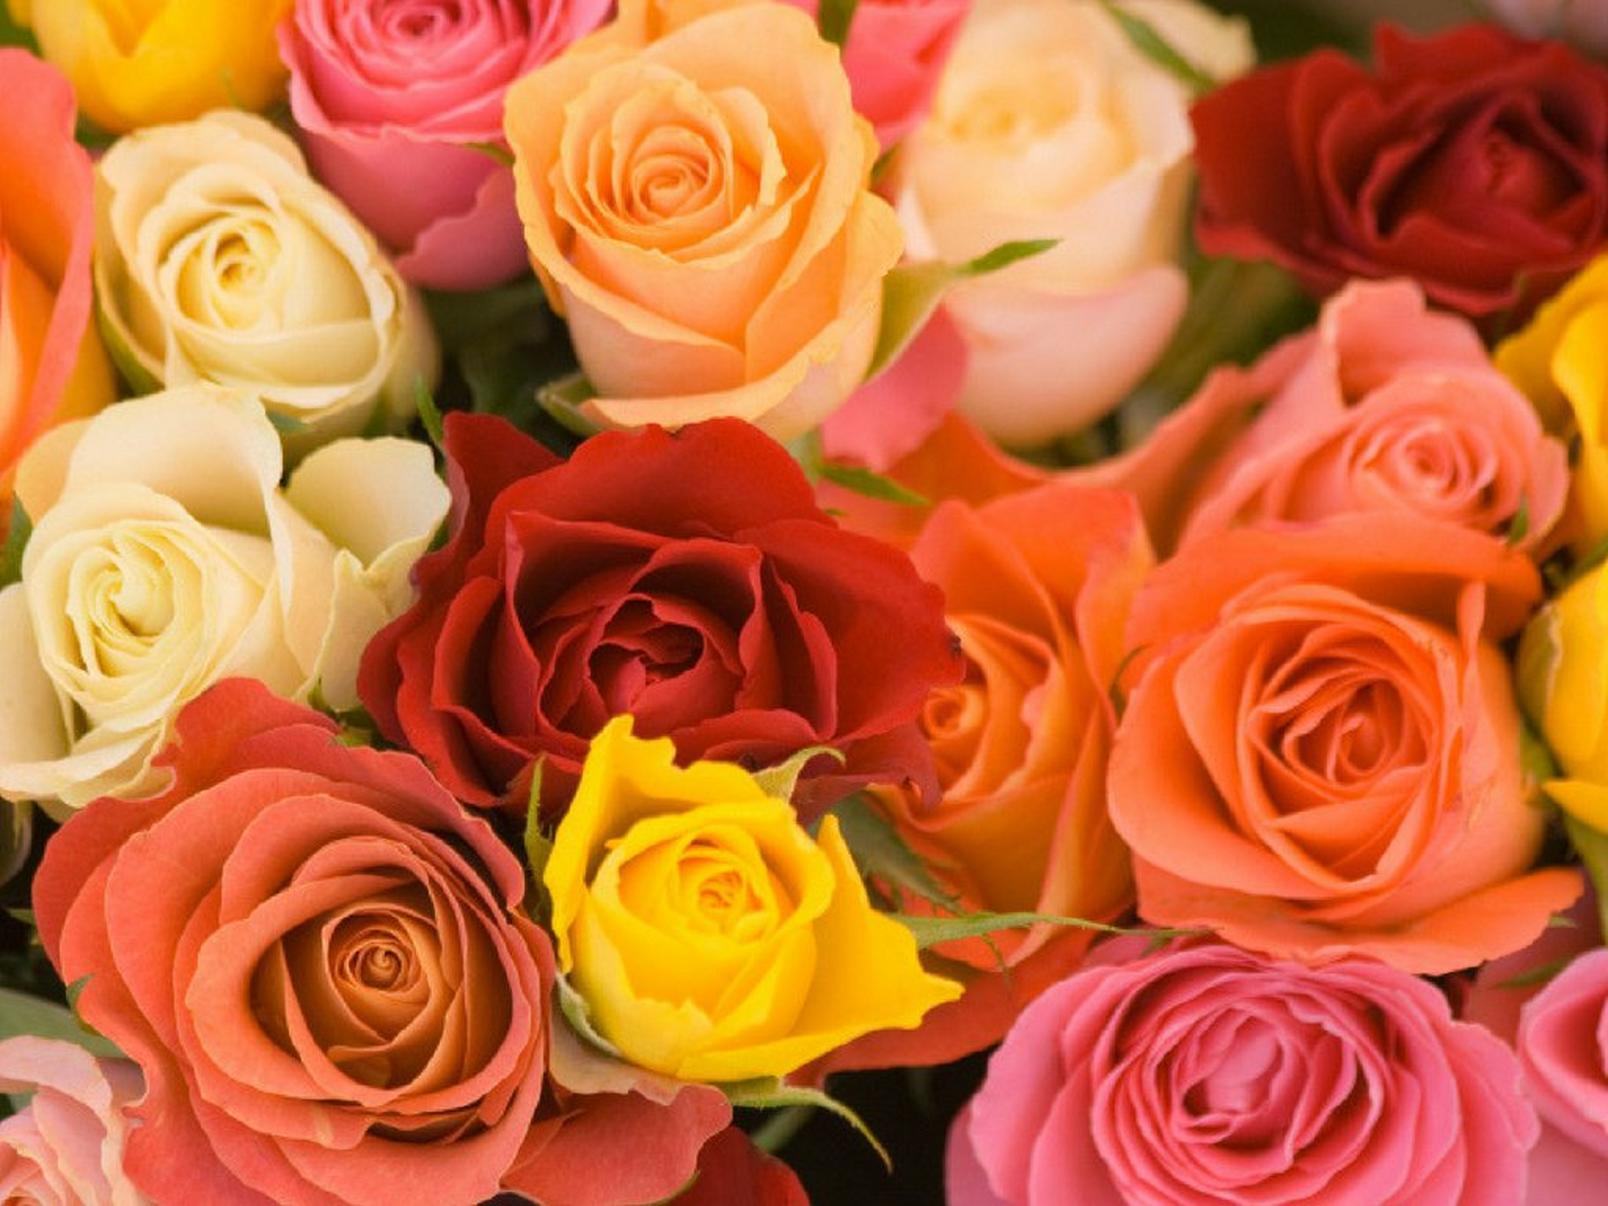 roses-pink-orange-red-yellow-flowers